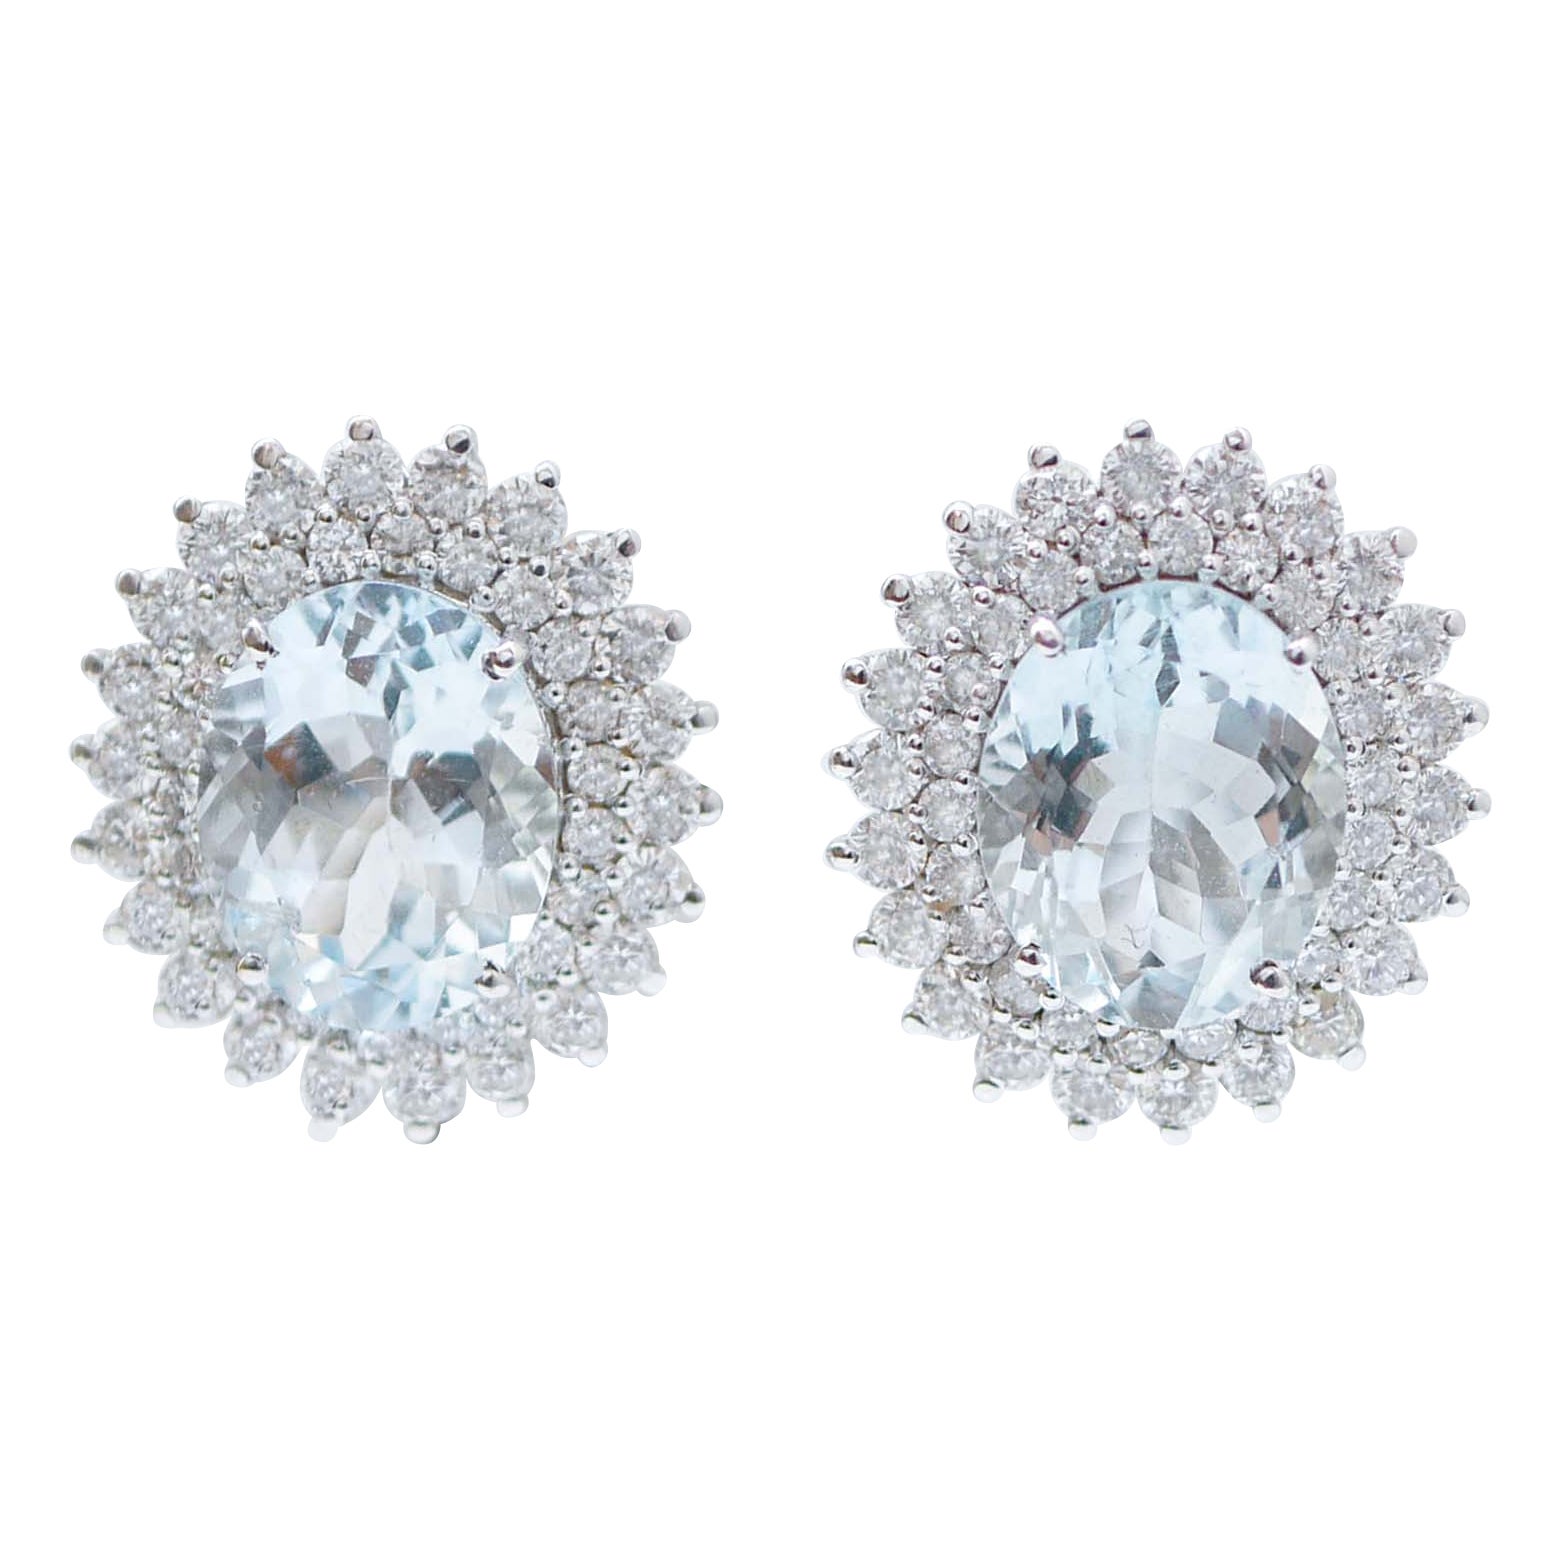 Aquamarine, Diamonds, 18 Karat White Gold Earrings.